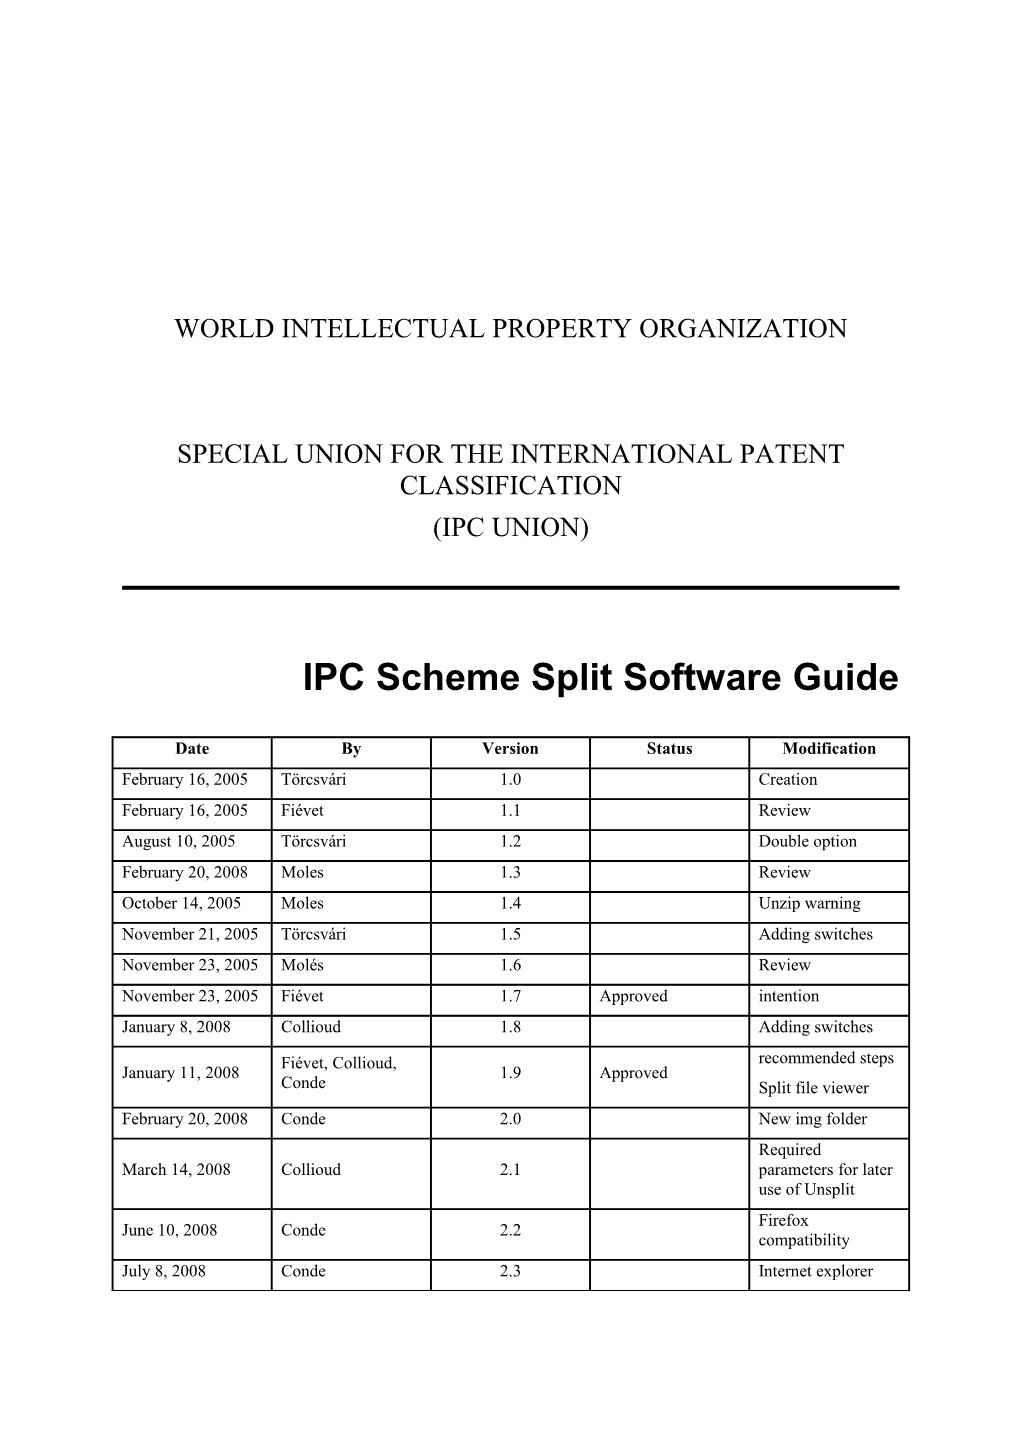 IPC Scheme Split Software Guide